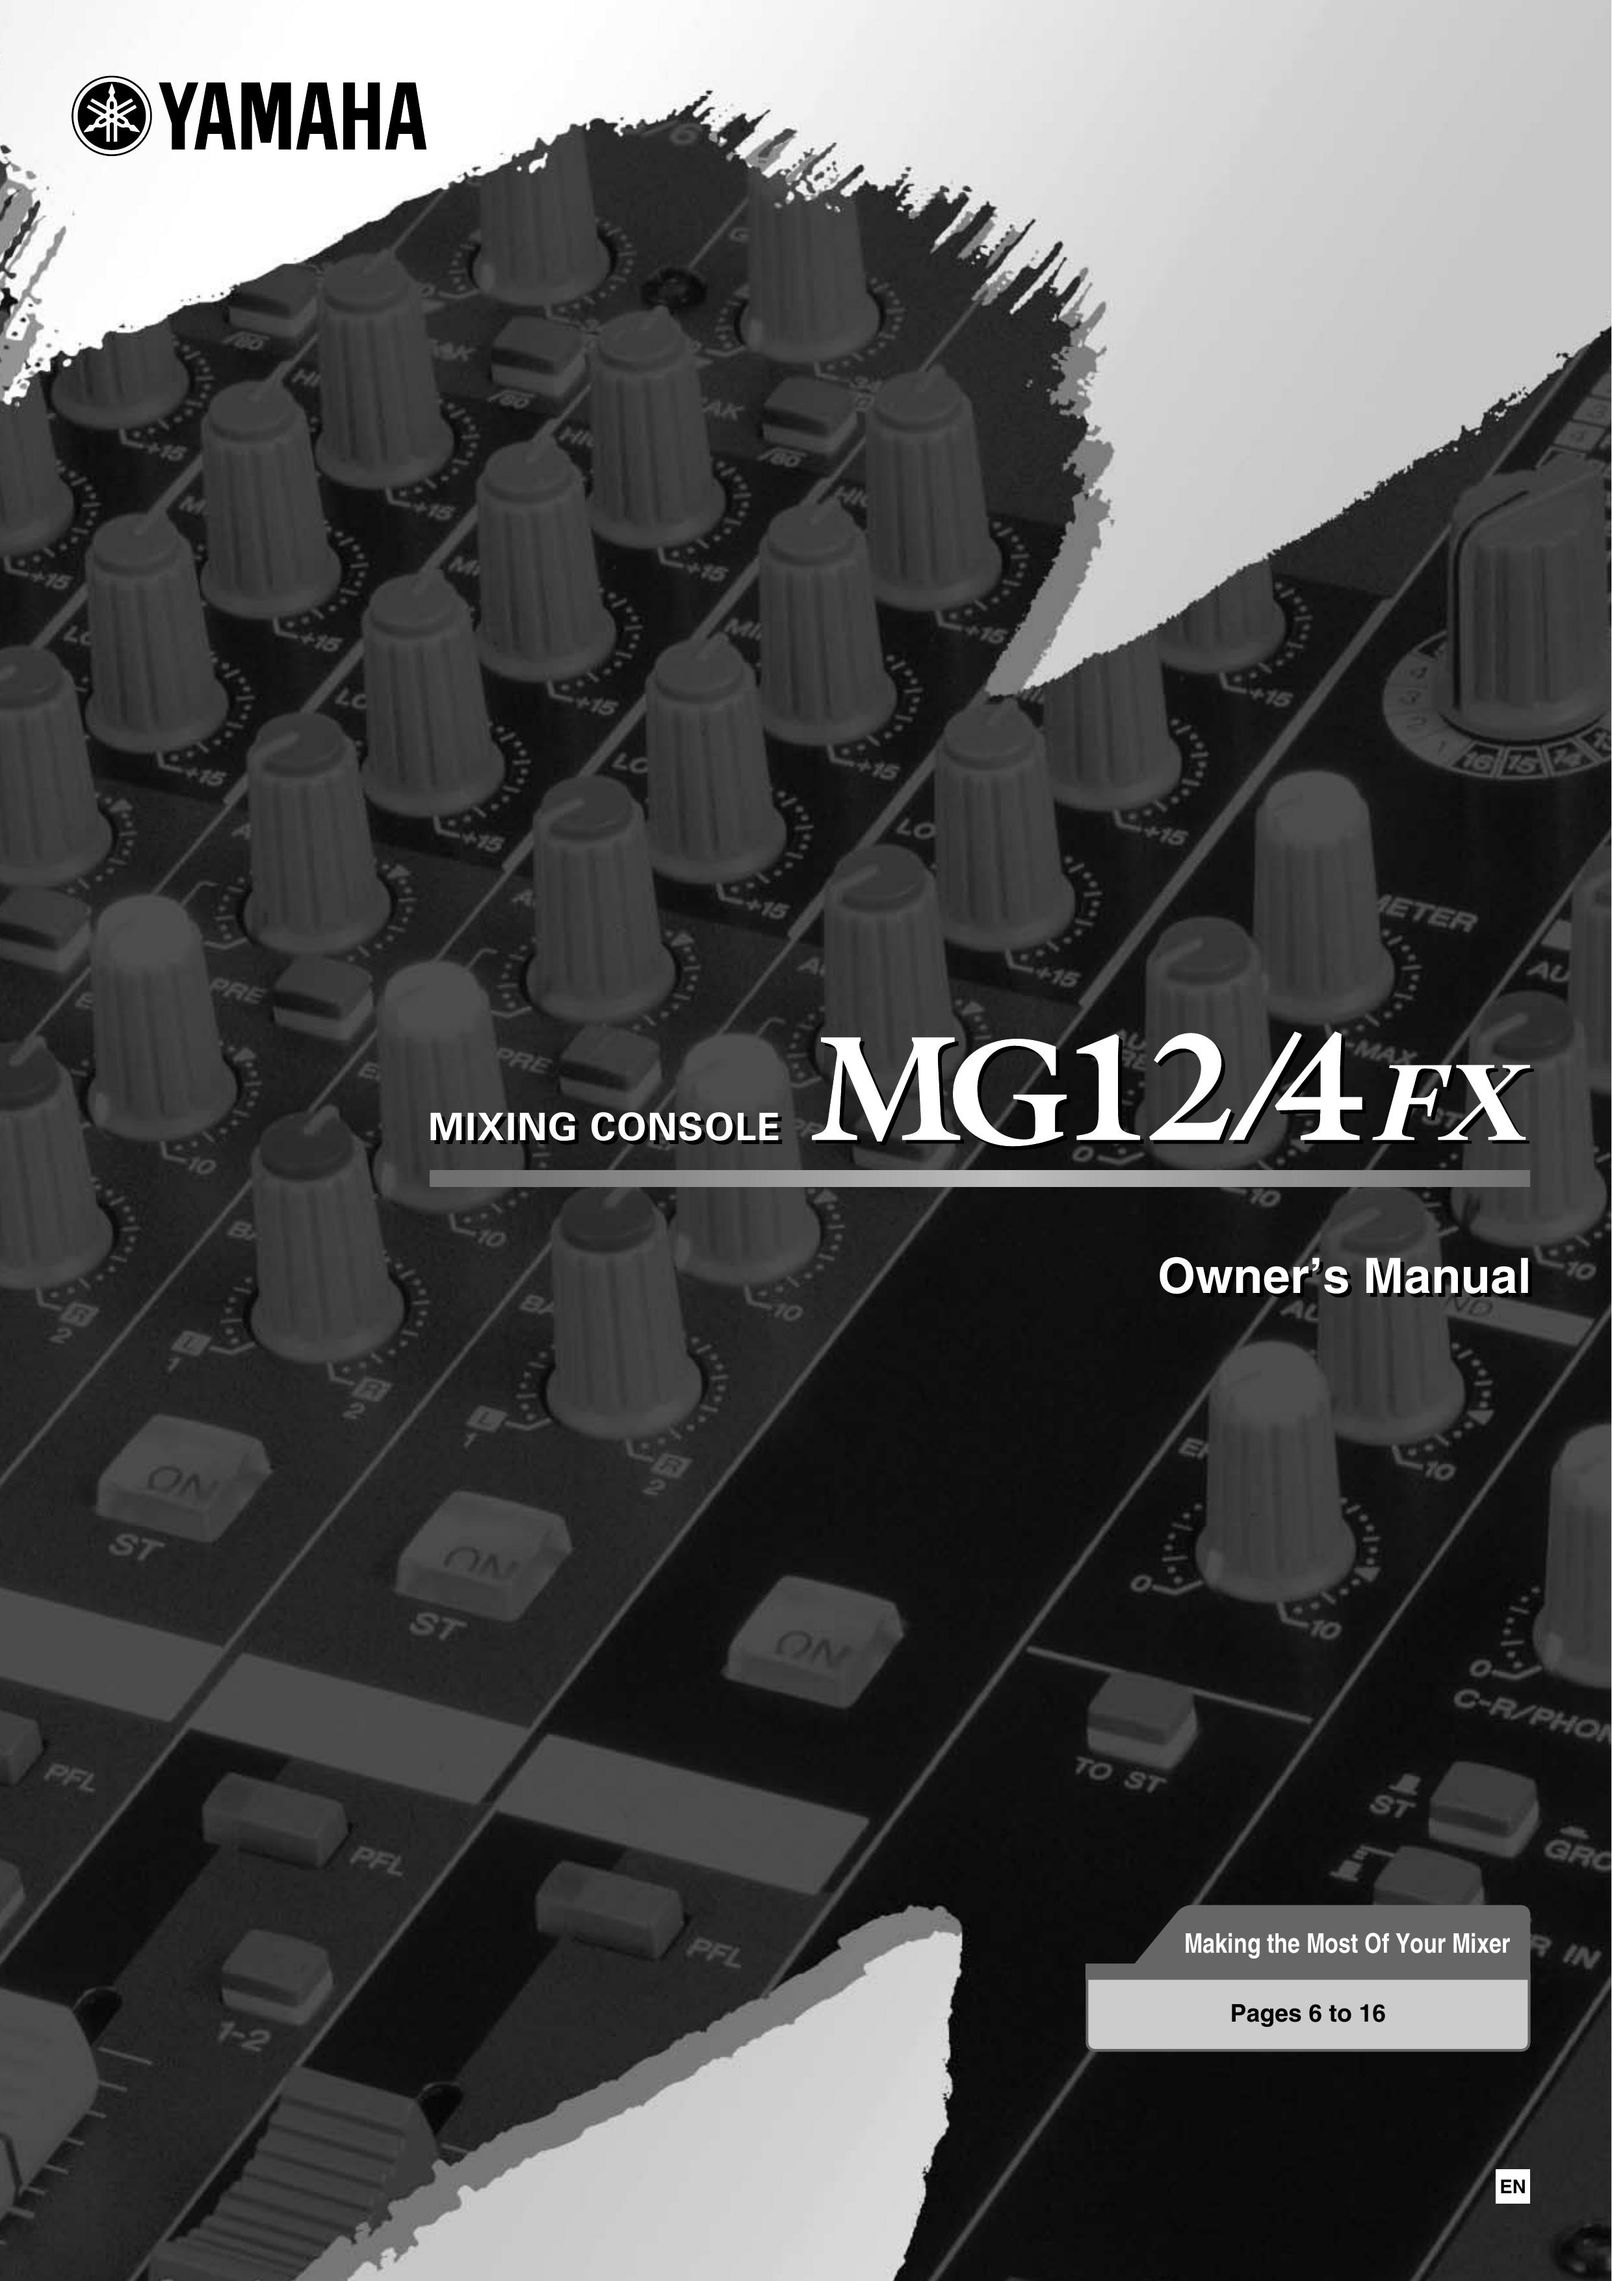 Yamaha MG12XU Musical Toy Instrument User Manual